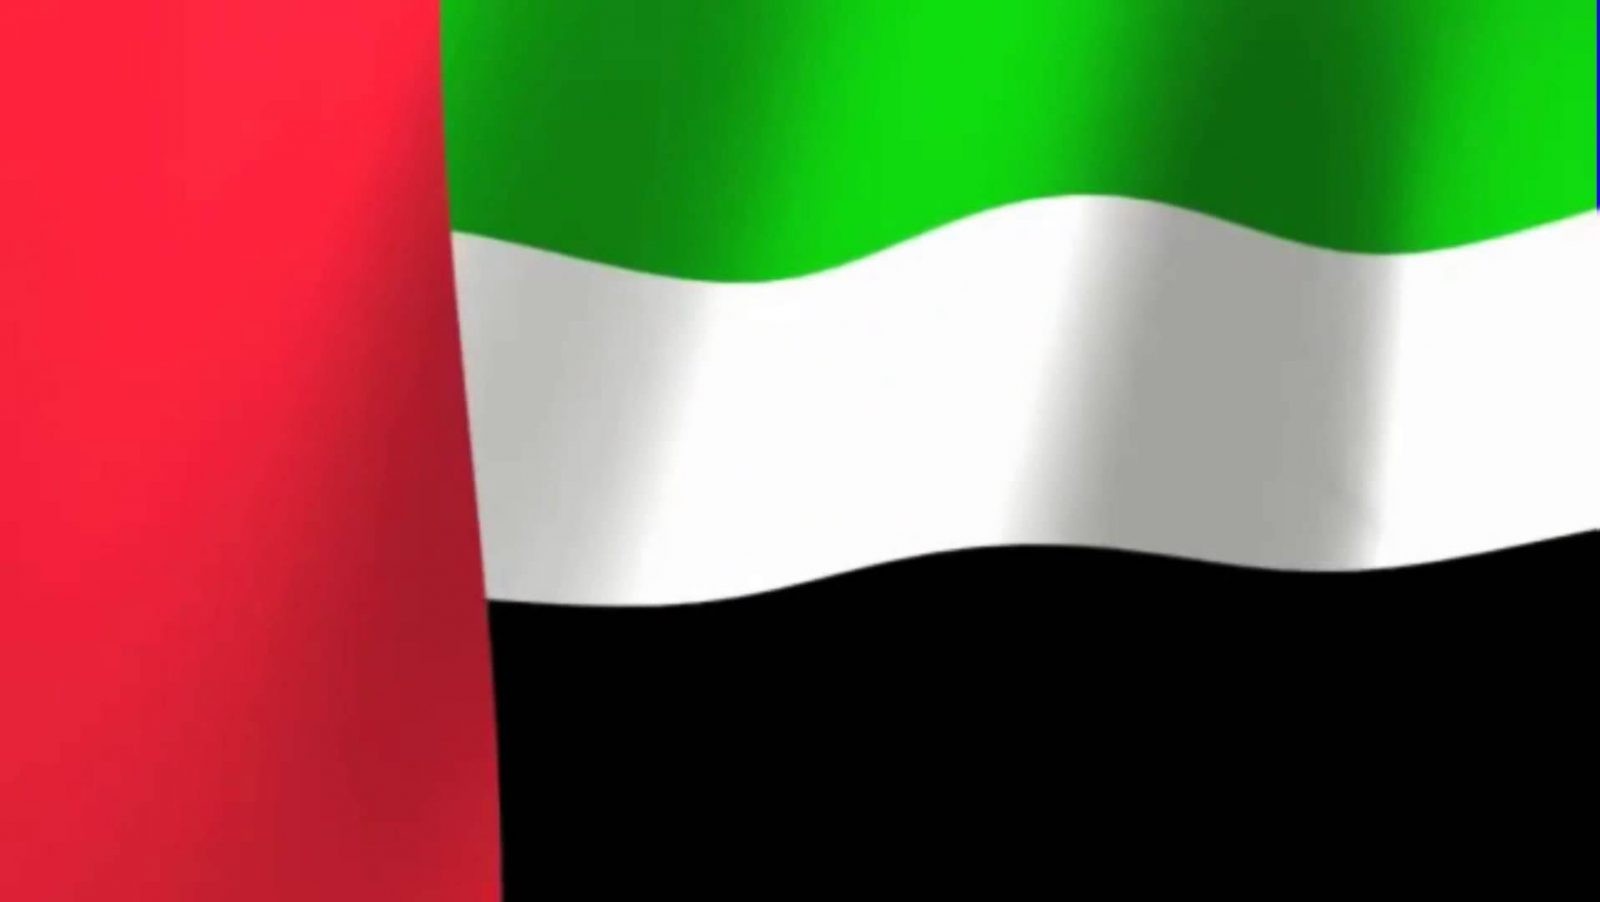 UAE RAK IBC - United Arab Emirates International Business Company